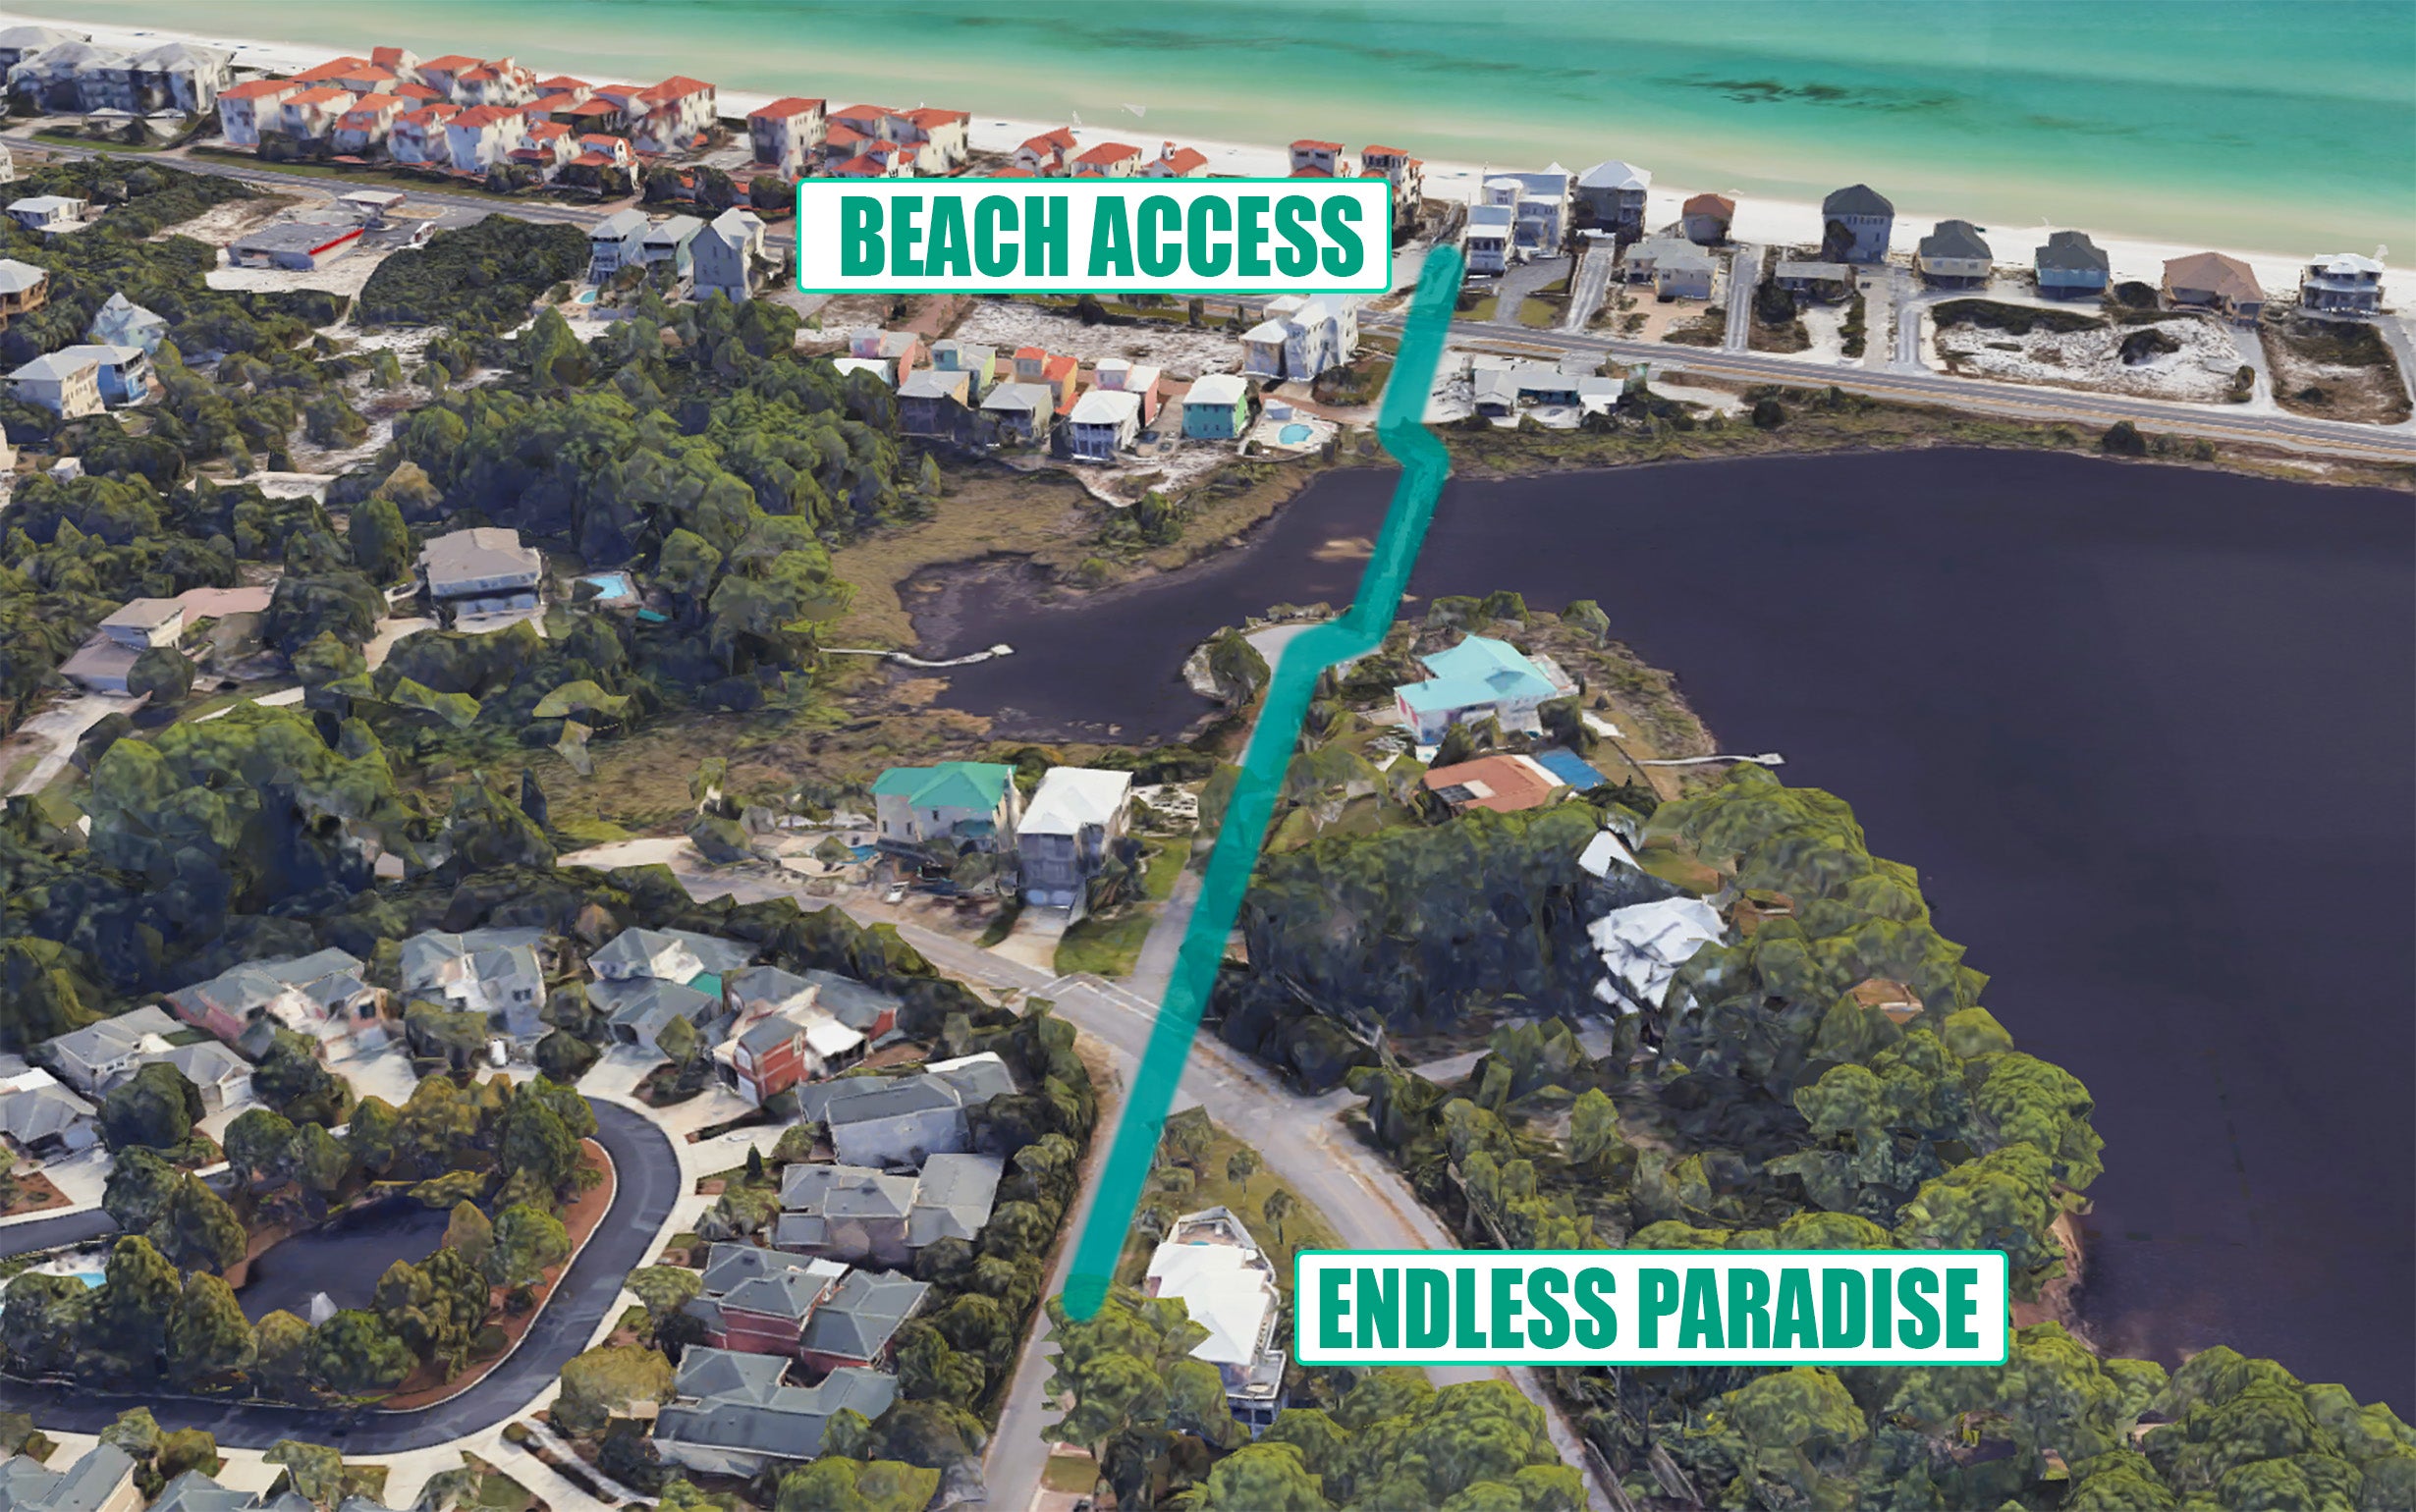 Endless Paradise Beach Access